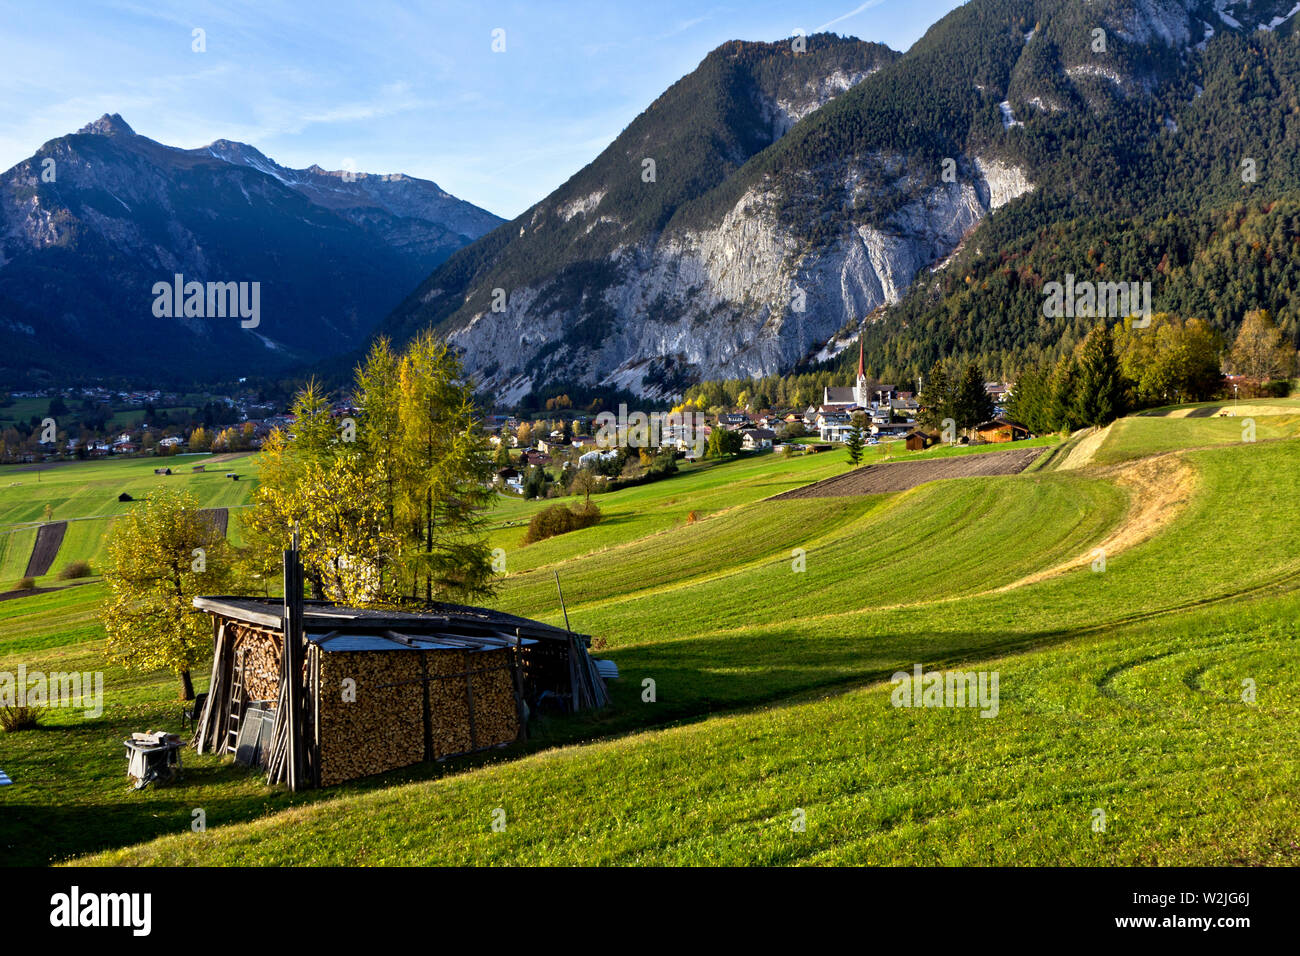 The alpin area round the hamlet of Dormitz, Nassereith municipality, Imst district, Tyrol, Austria, Europe. Stock Photo